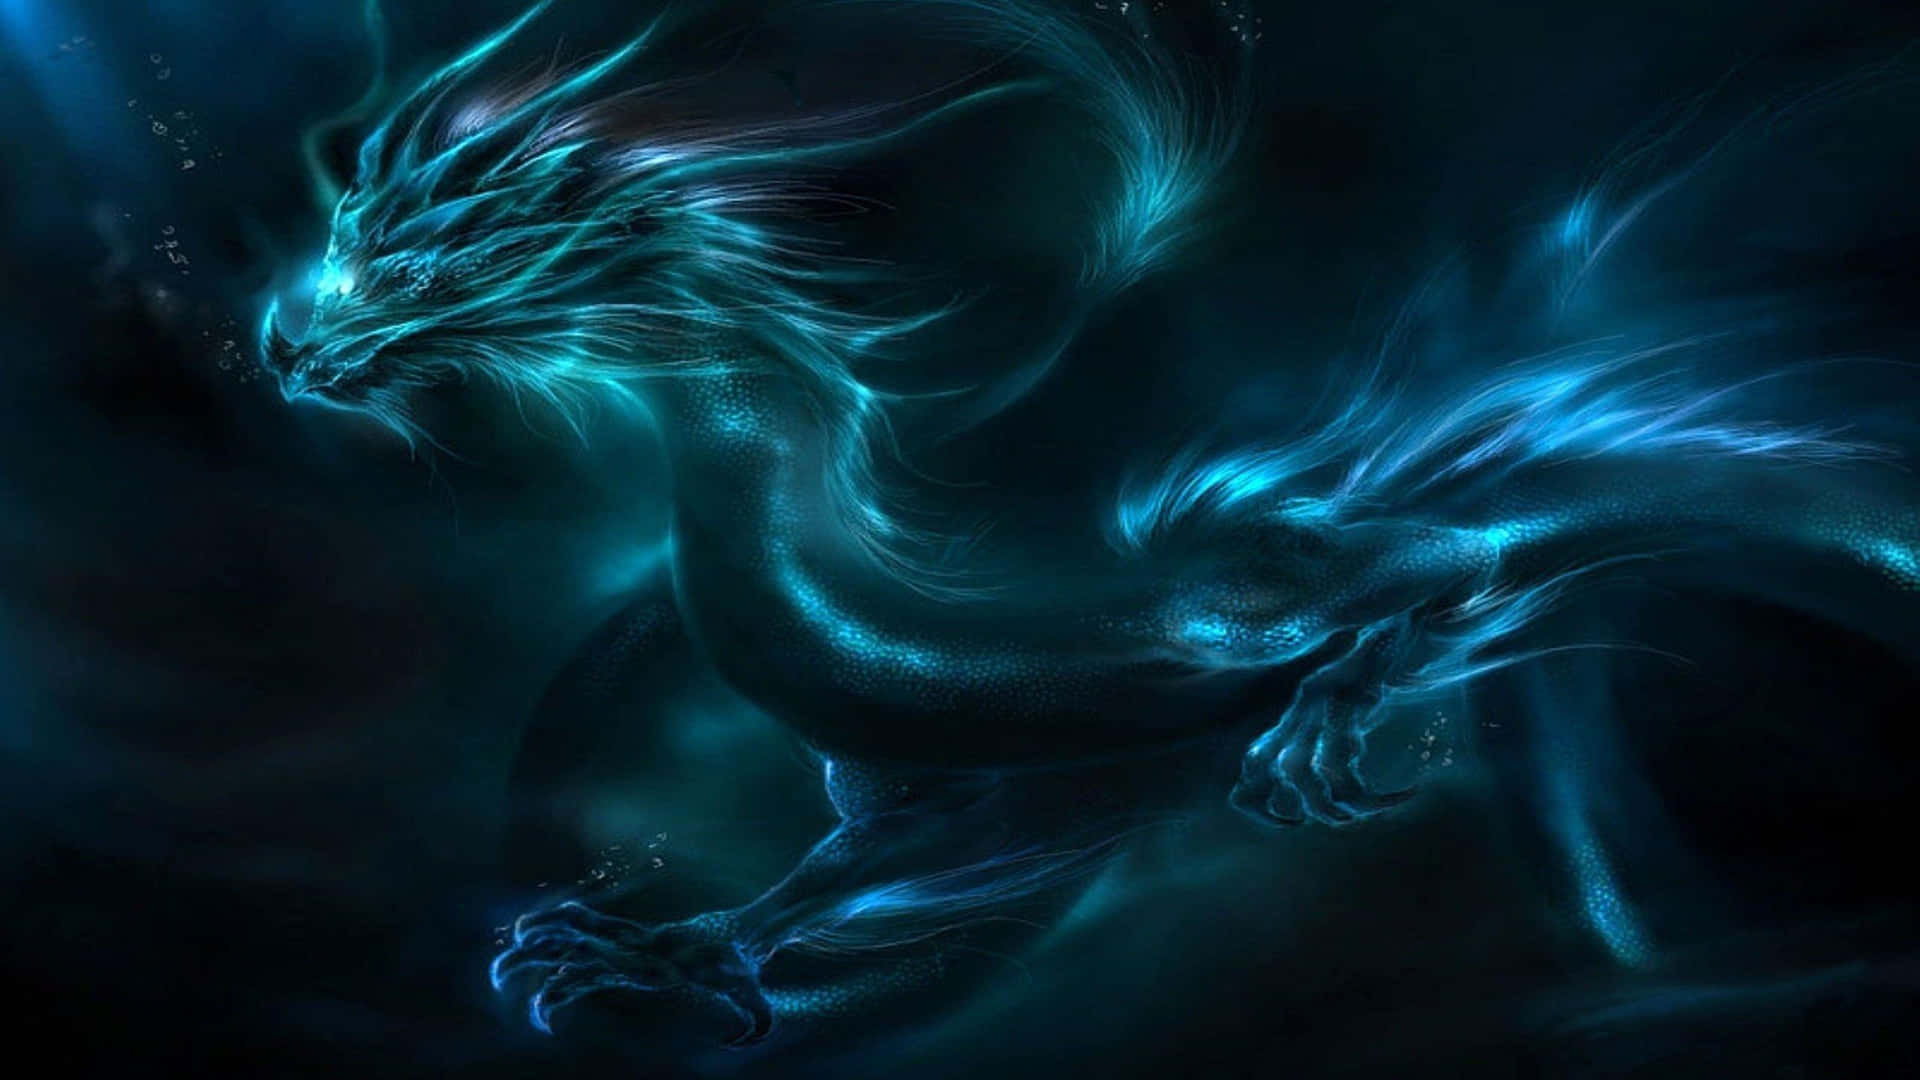 A Blue Dragon In The Dark